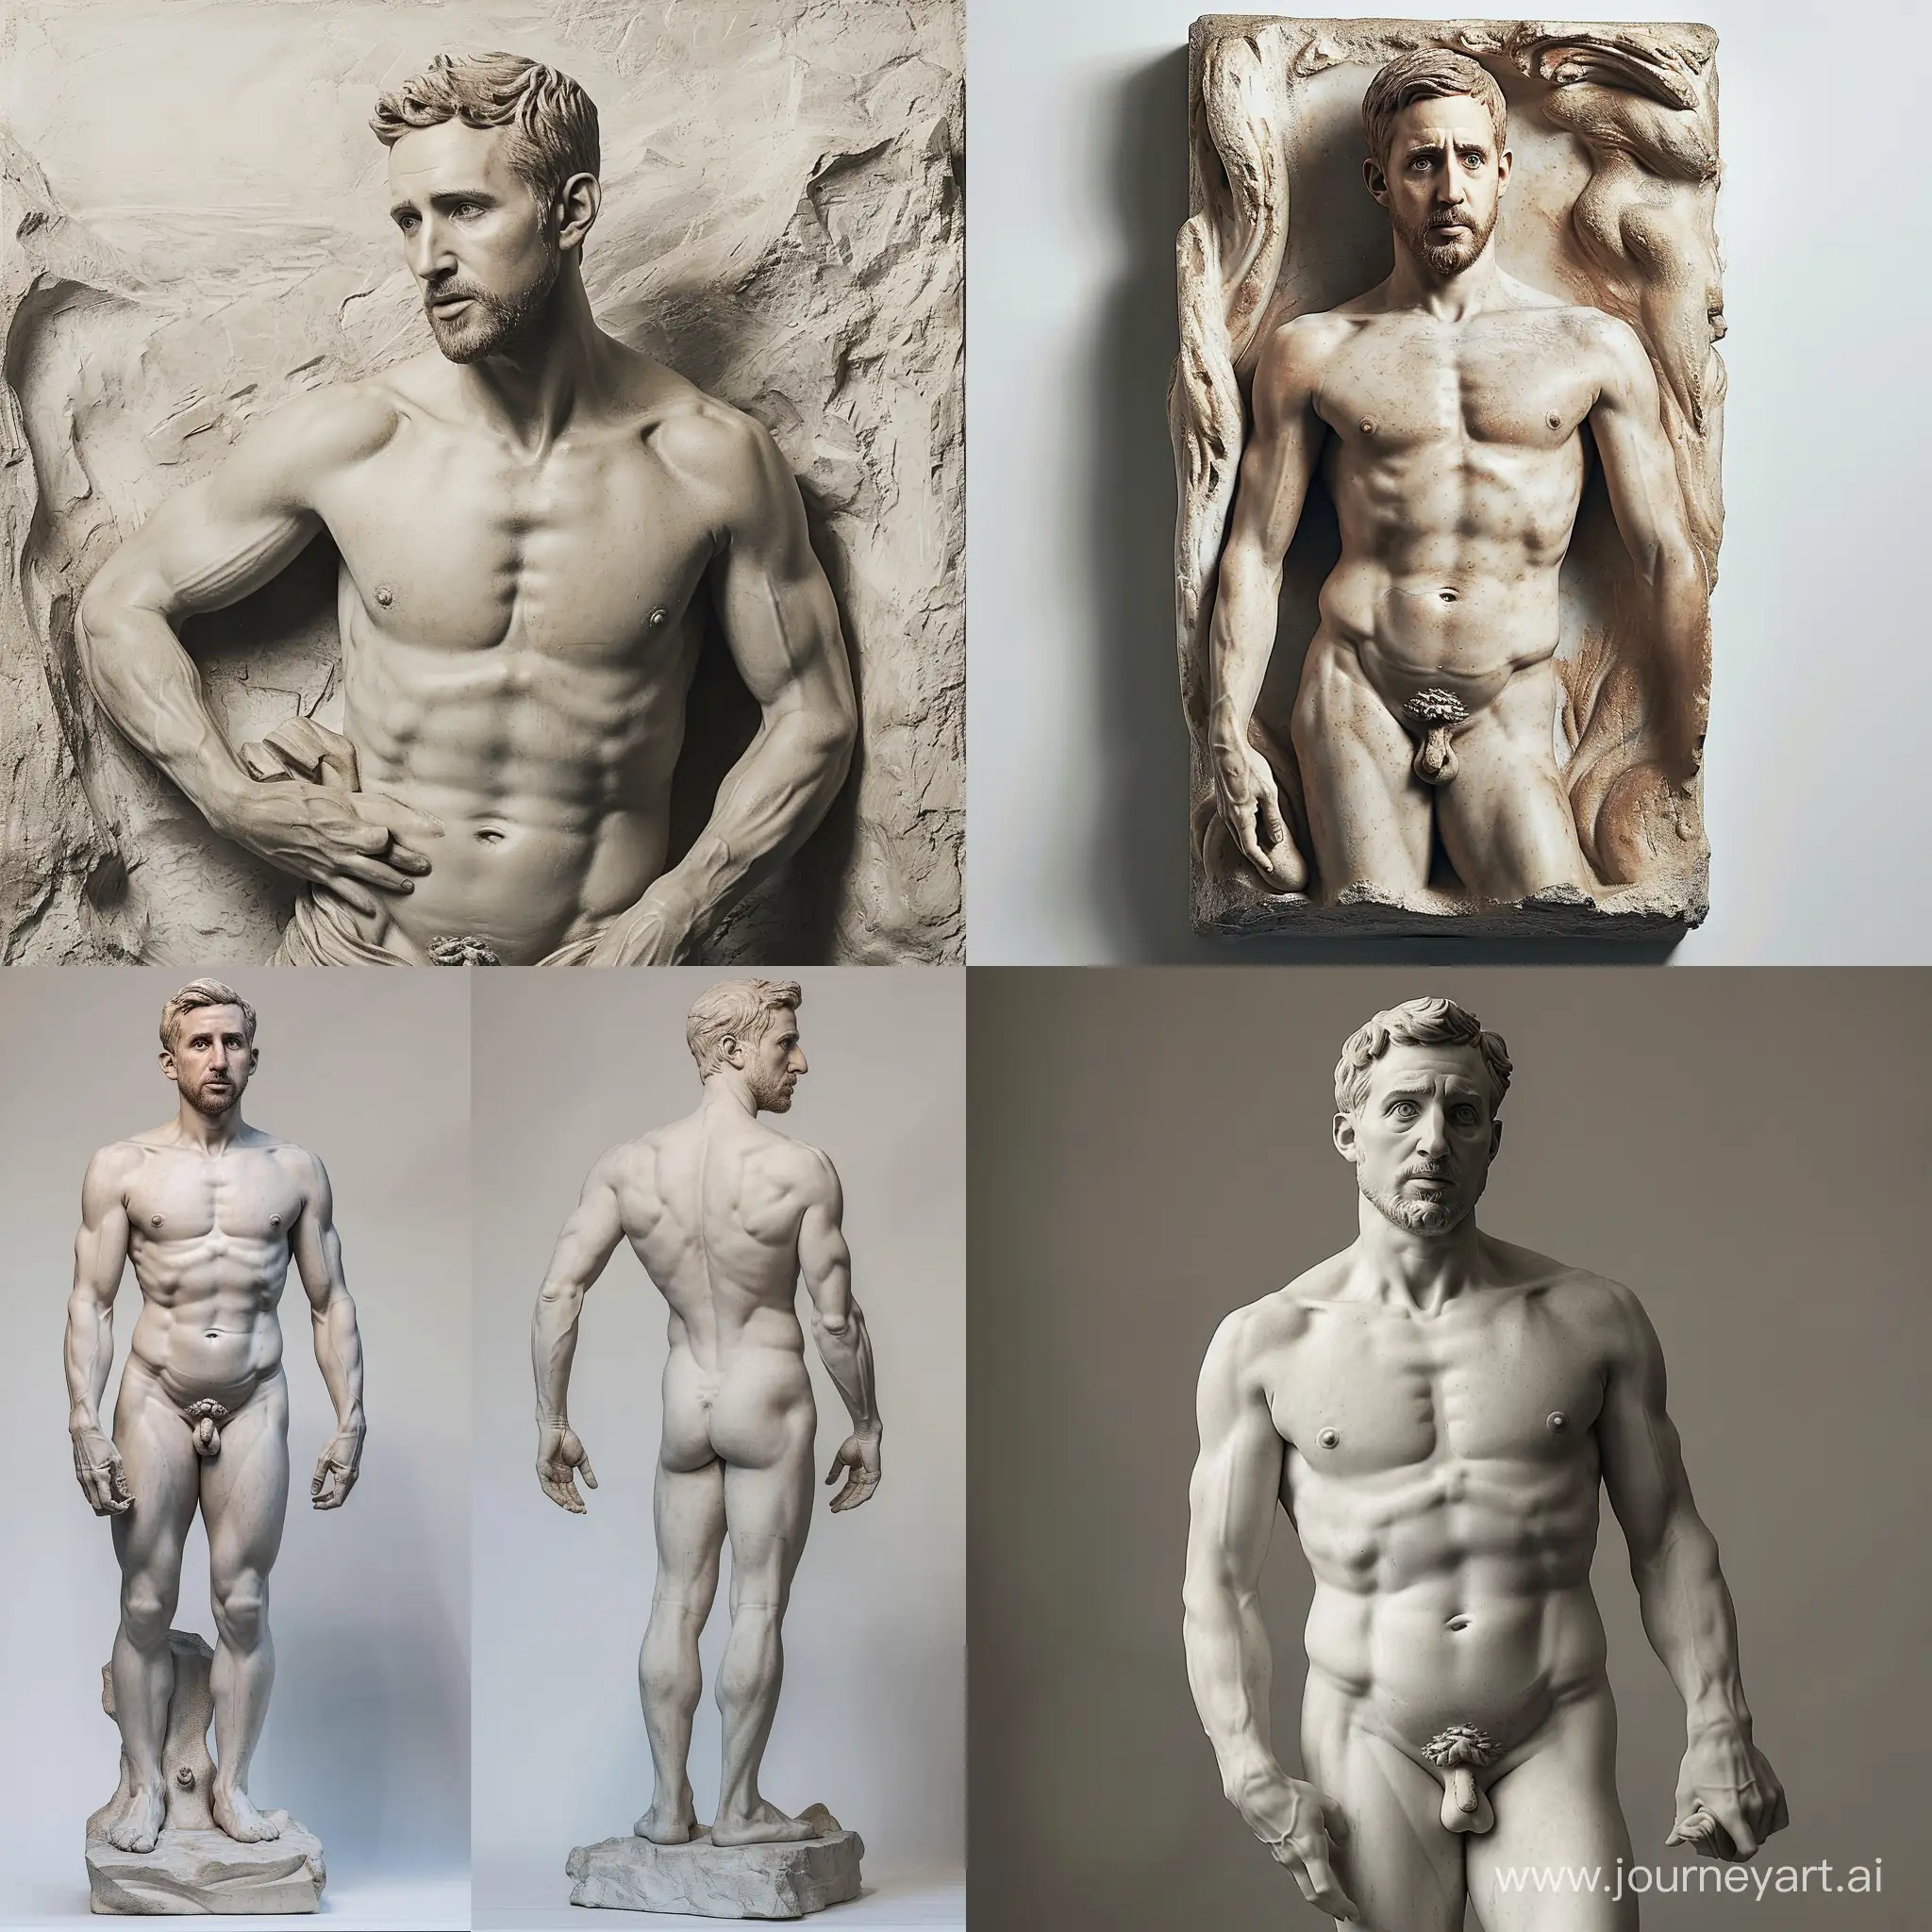 ryan gosling sculpted by Michelangelo, full body shot